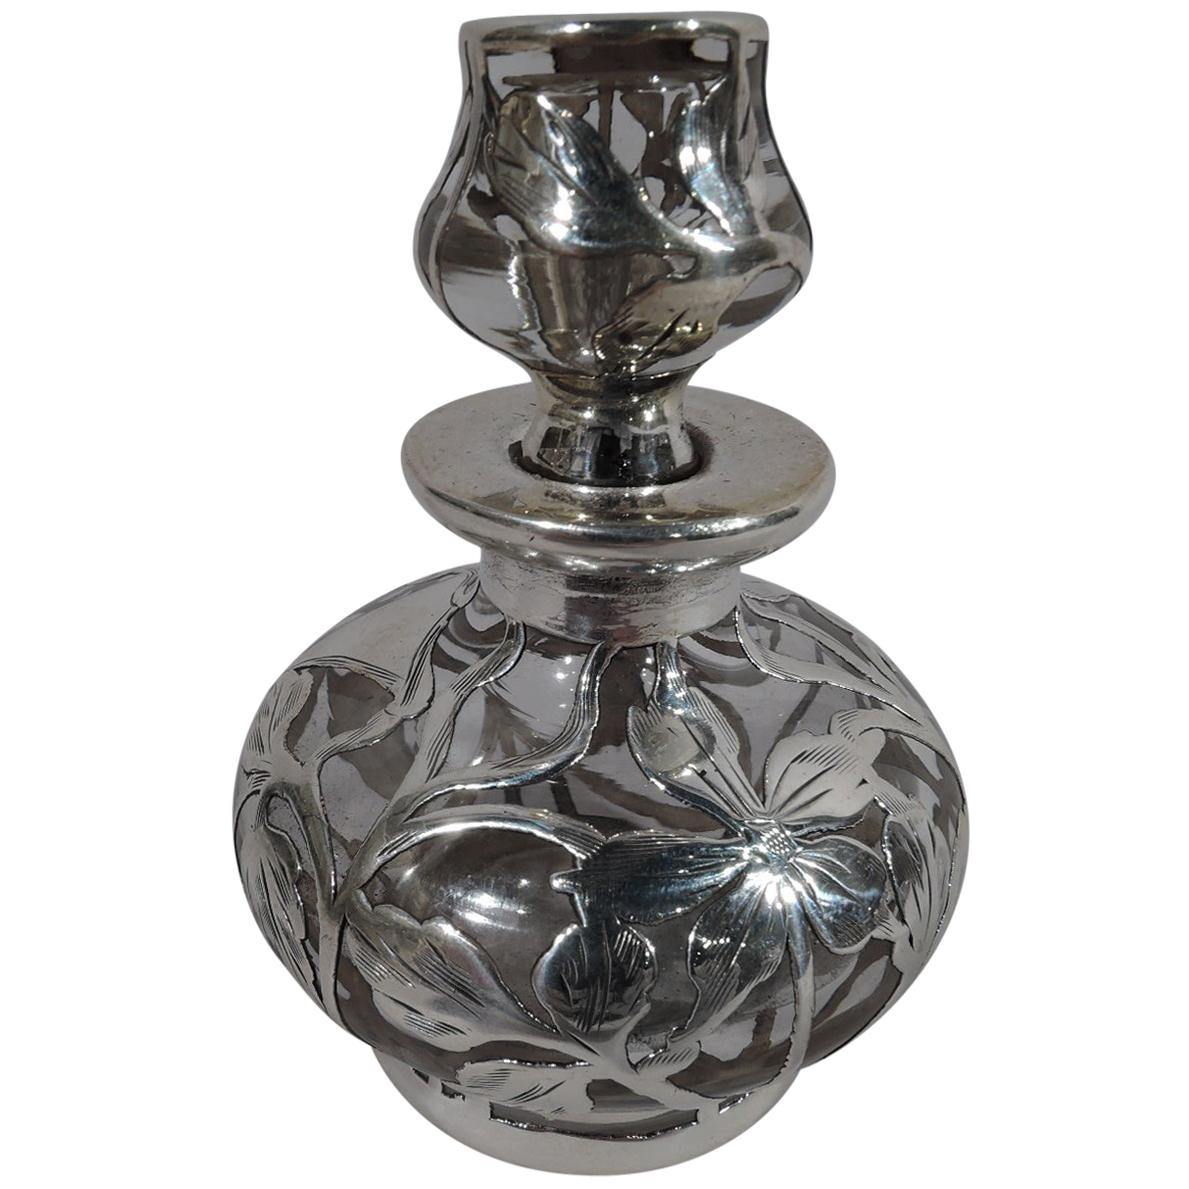 Antique American Art Nouveau Silver Overlay Perfume by Matthews